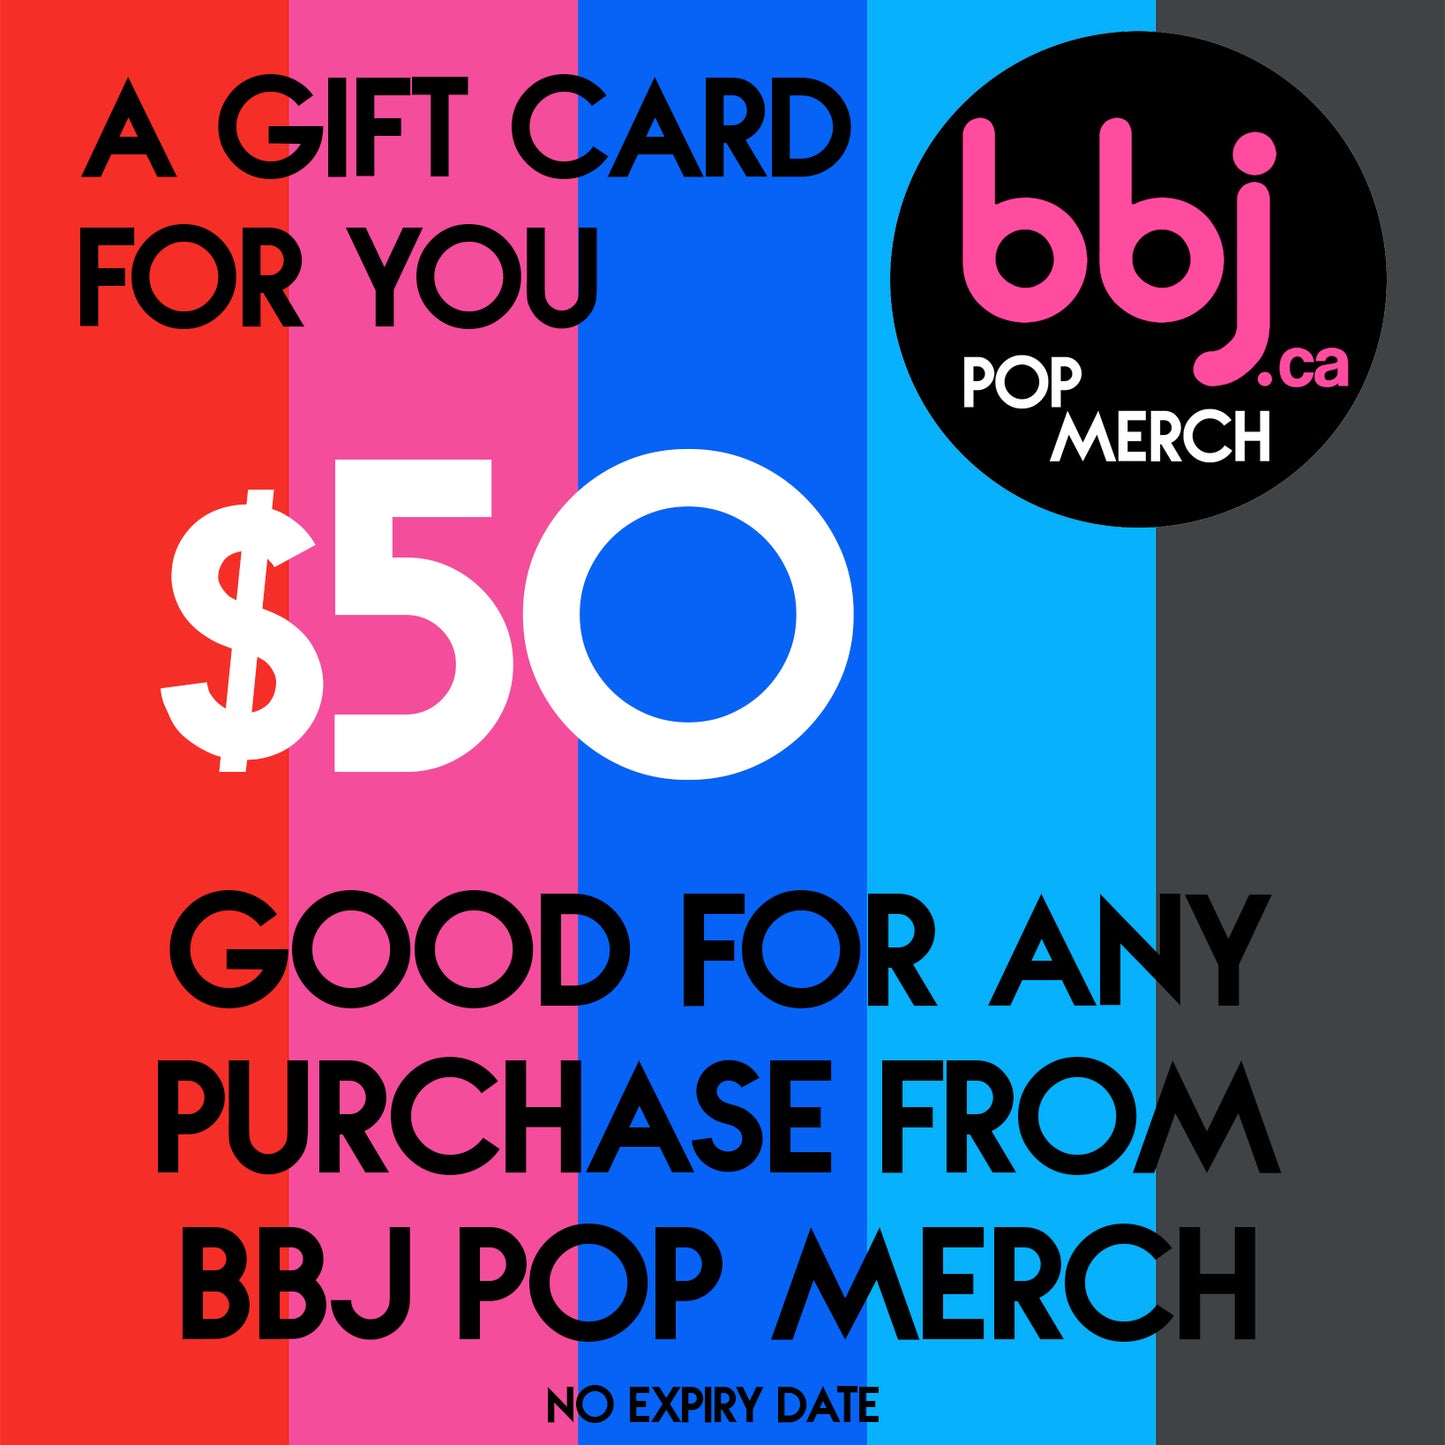 BBJ Pop Merch gift card